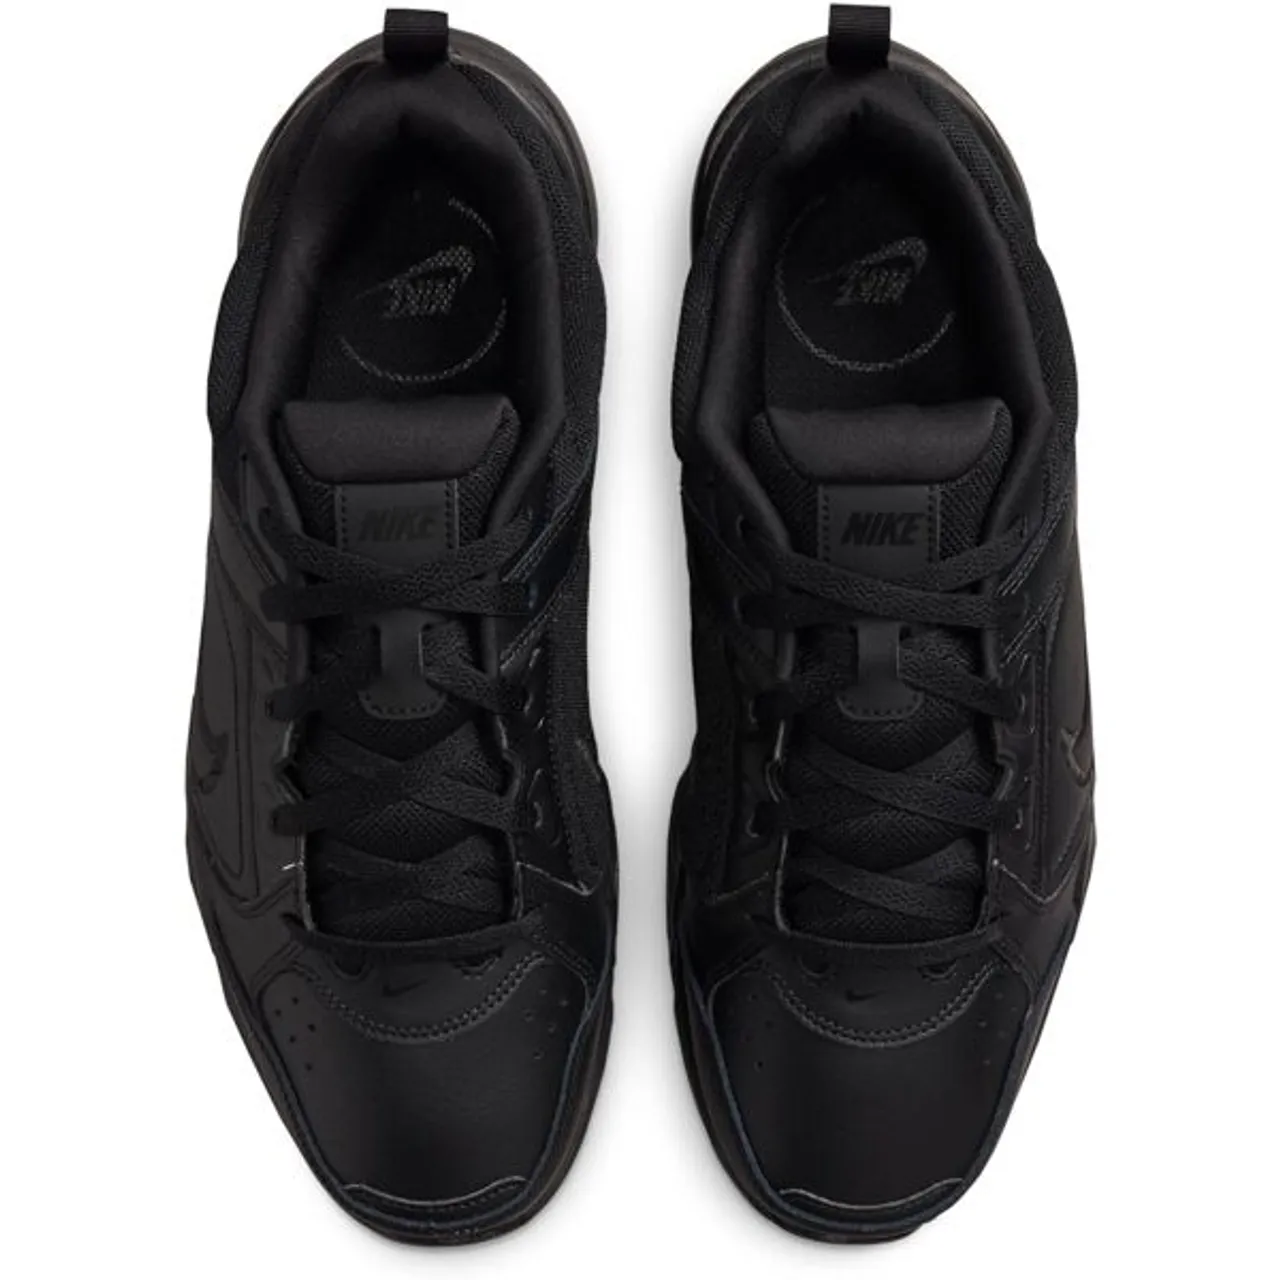 Sneaker NIKE "DEFY ALL DAY" Gr. 43, schwarz (black, black, black) Schuhe Schnürhalbschuhe Trainingsschuhe